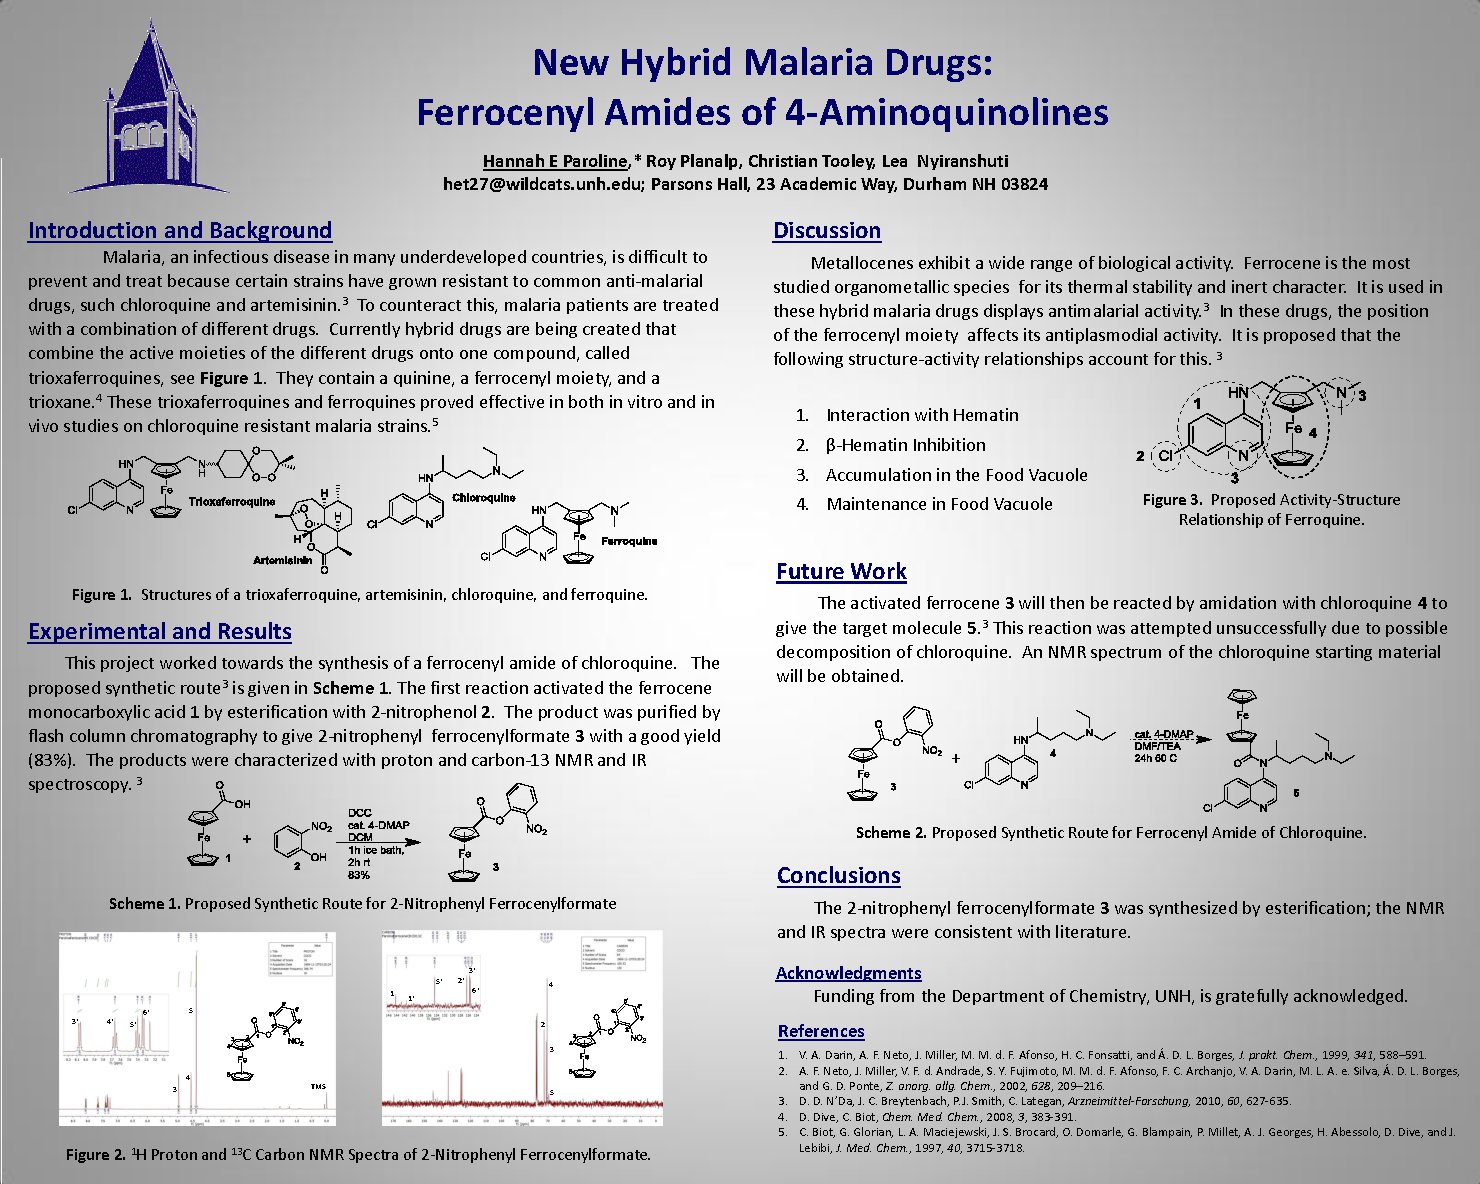 New Hybrid Malaria Drugs: Ferrocenyl Amides Of 4-Aminoquinolines by hparoline